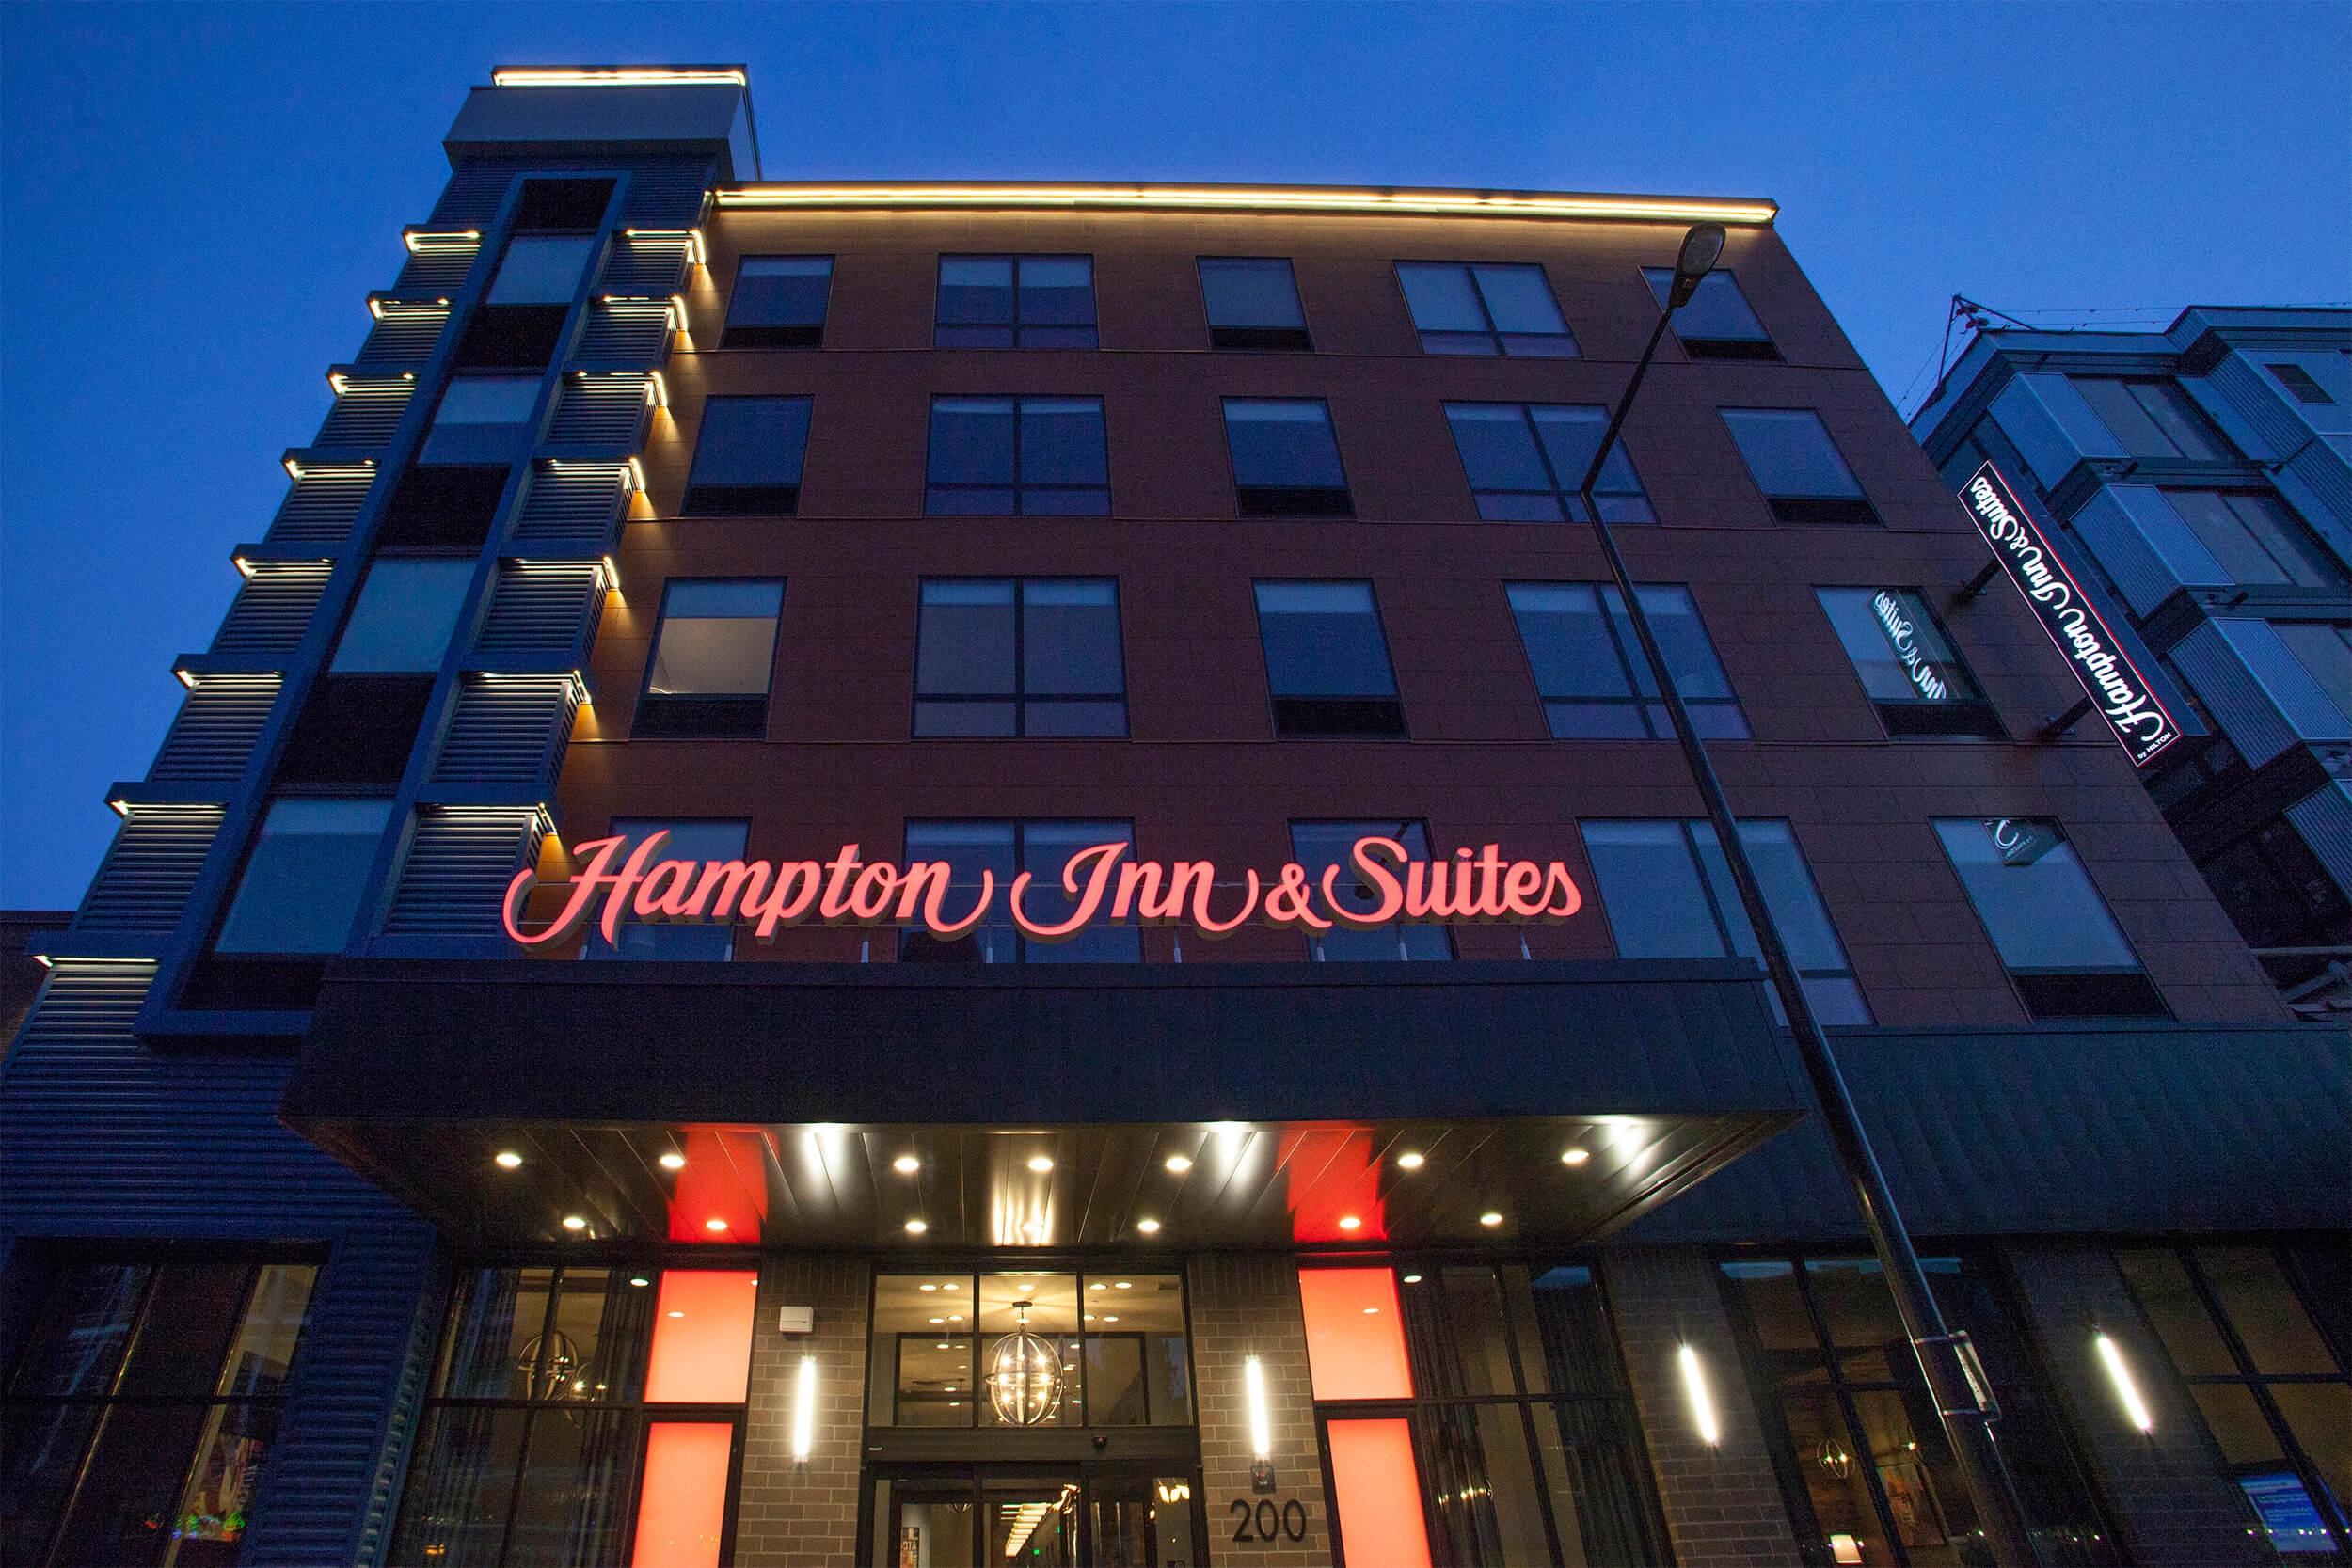 Hotels in St. Paul, MN Area, Saint Paul RiverCentre